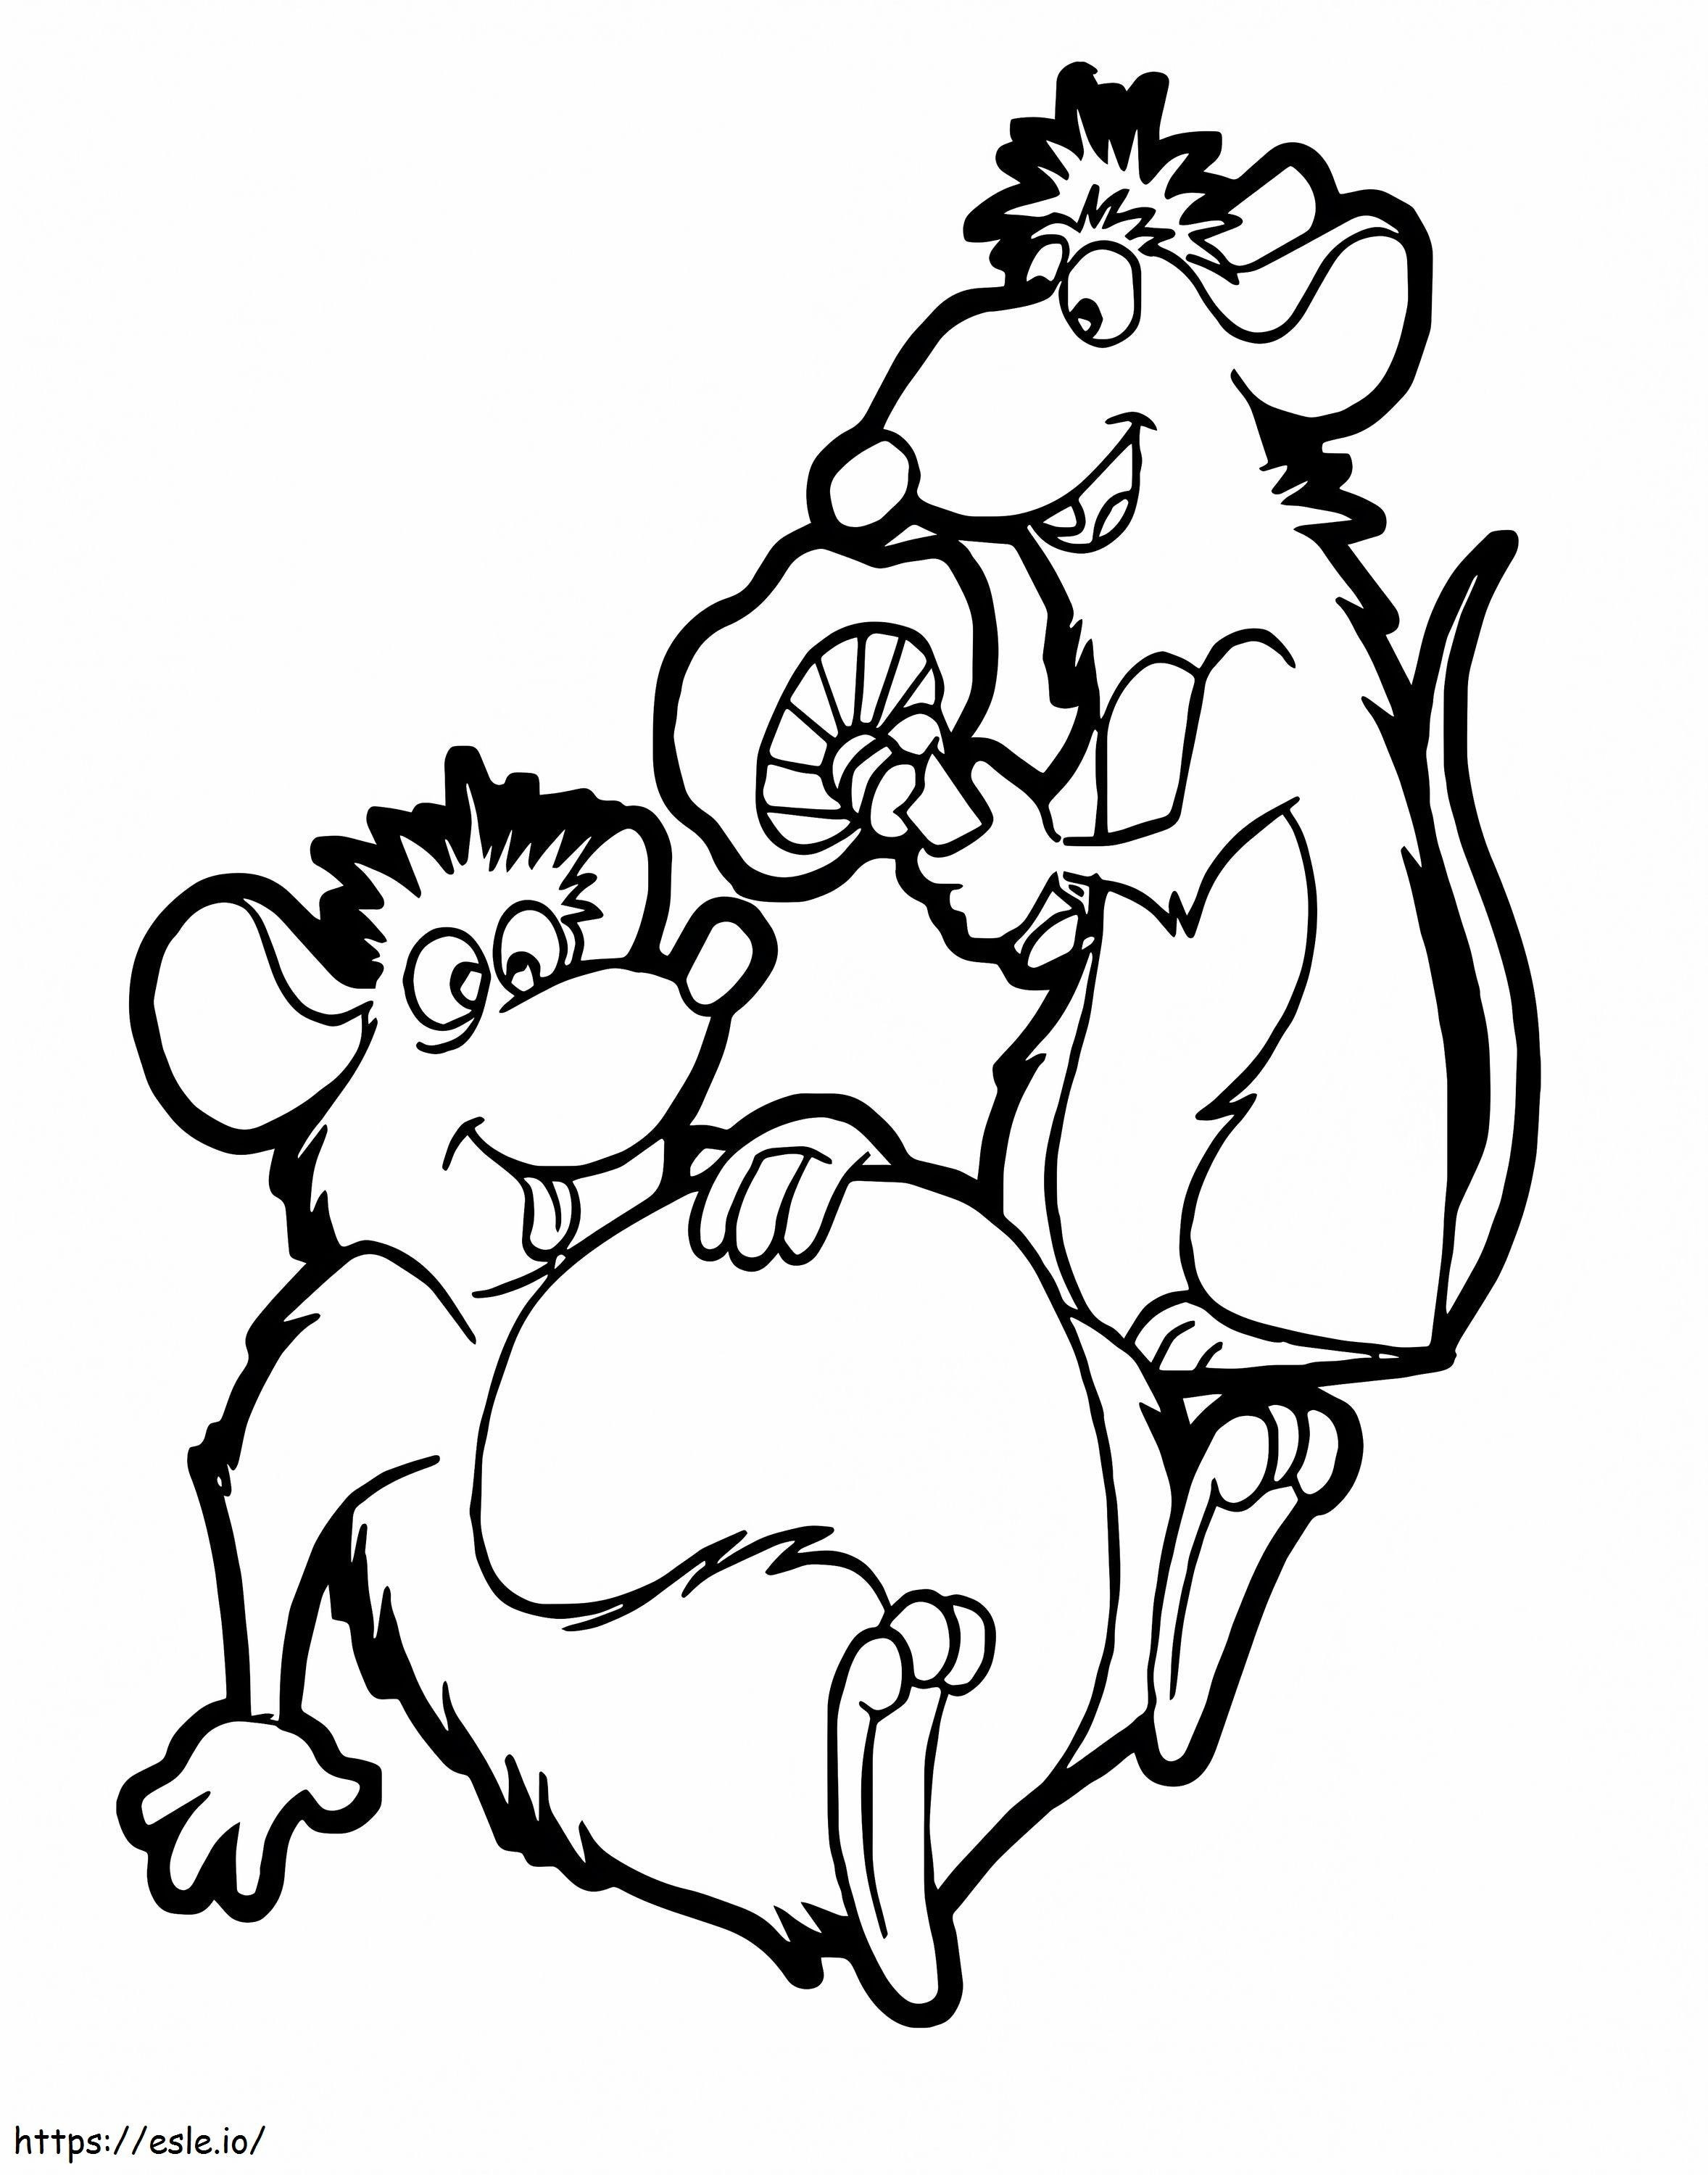 1555721540 Queijo Disney Ratatouille Ratatouille Fresco E Queijo De Queijo para colorir